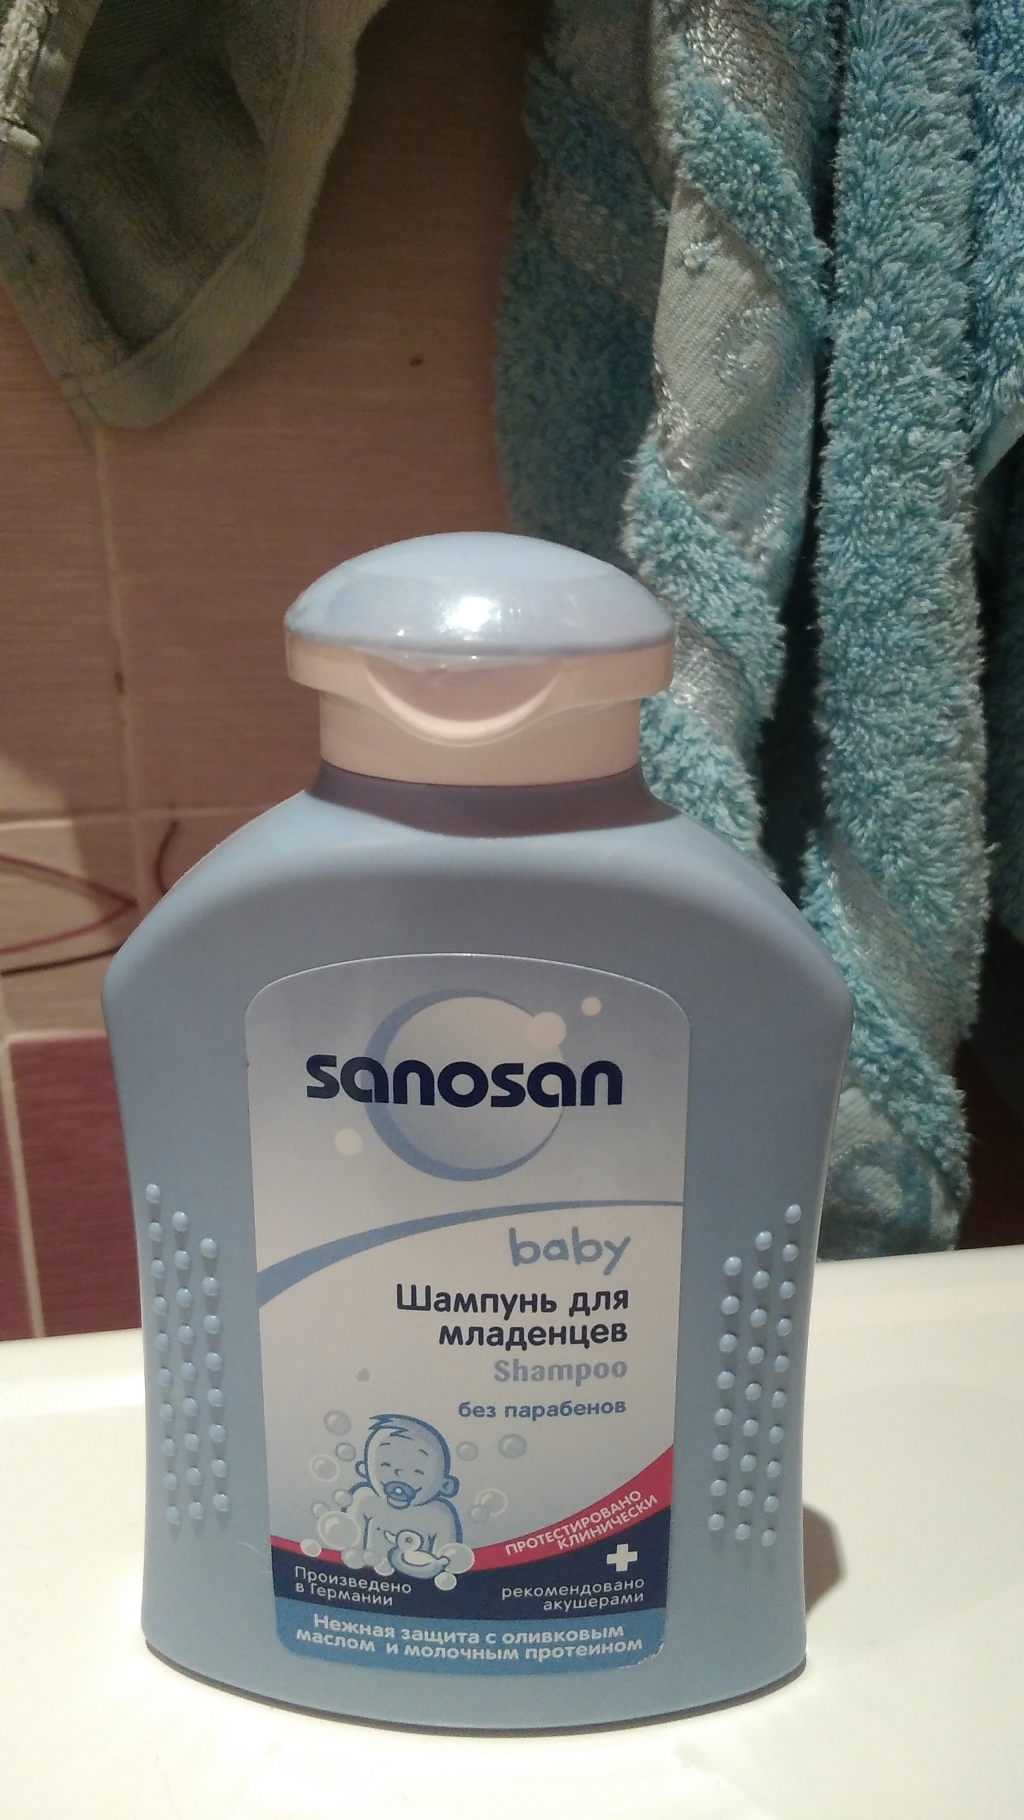 SANOSAN - Шампунь для младенцев Саносан. Безопасный шампунь для малышей, который